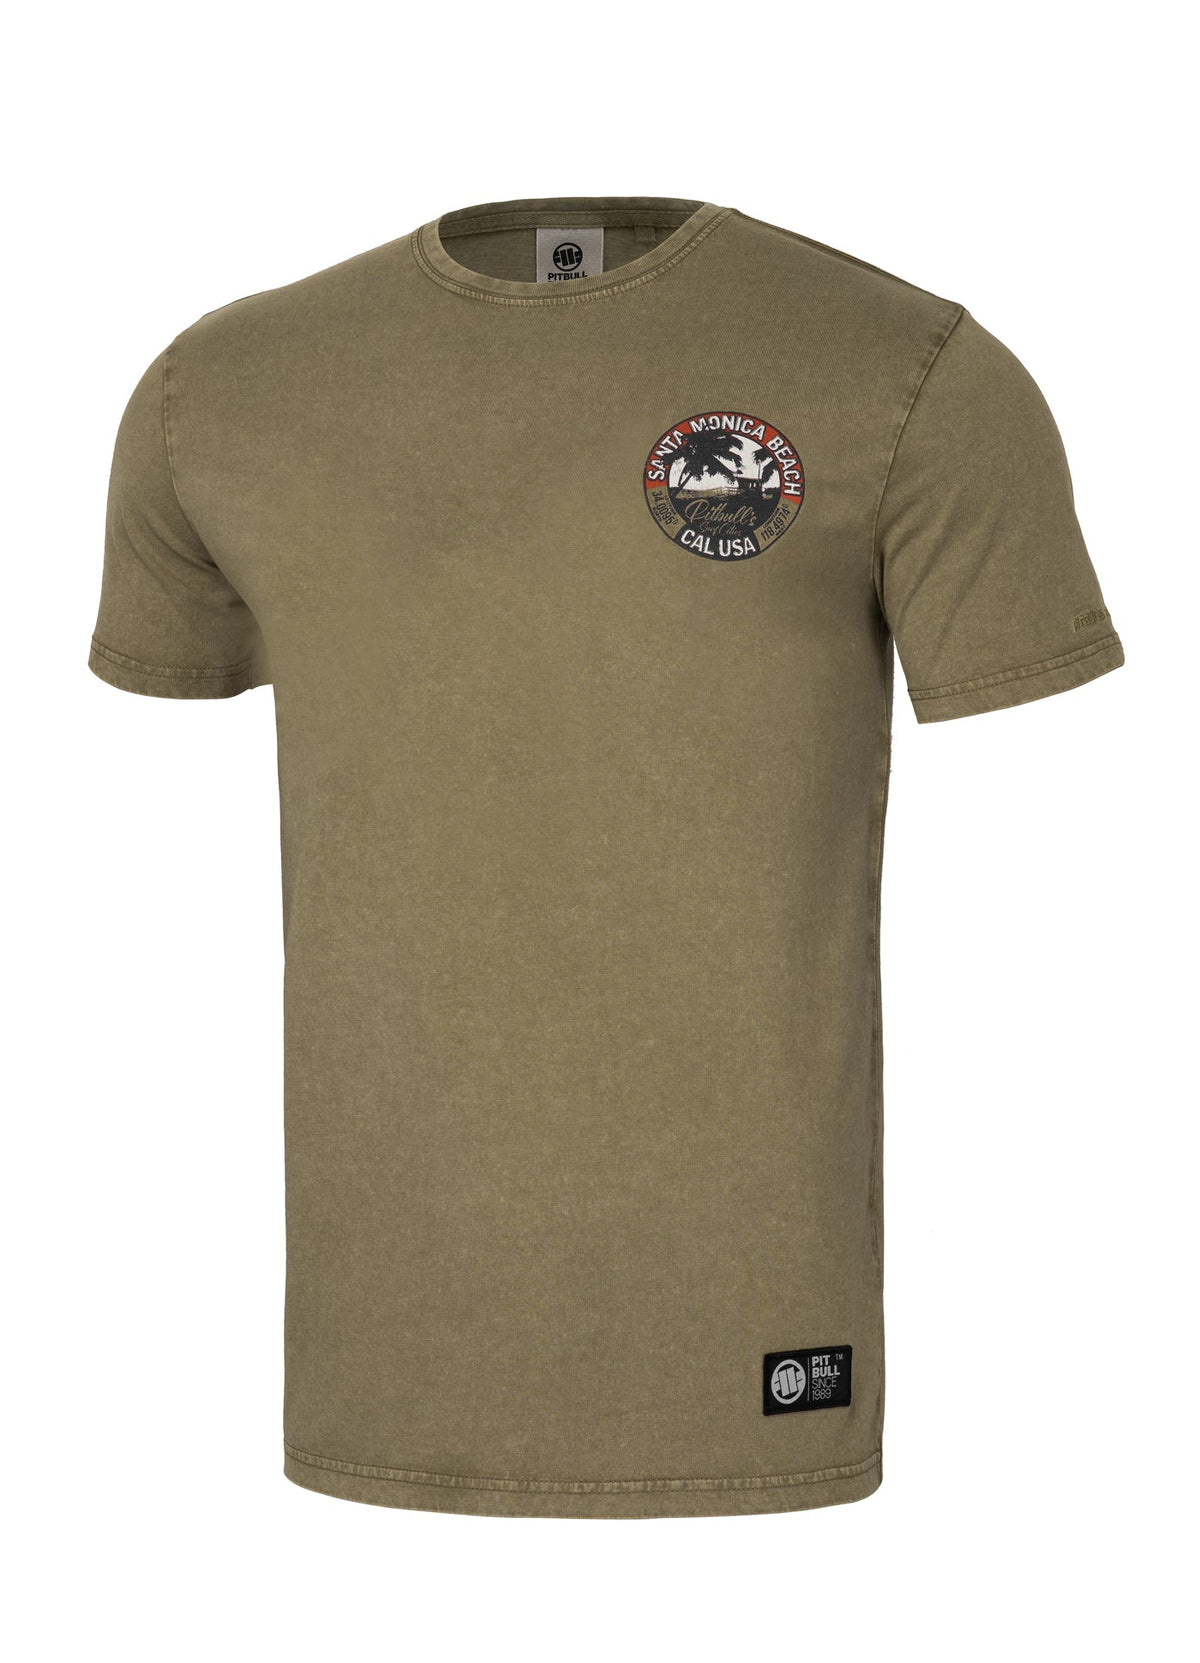 OCEANSIDE Coyote Brown T-shirt